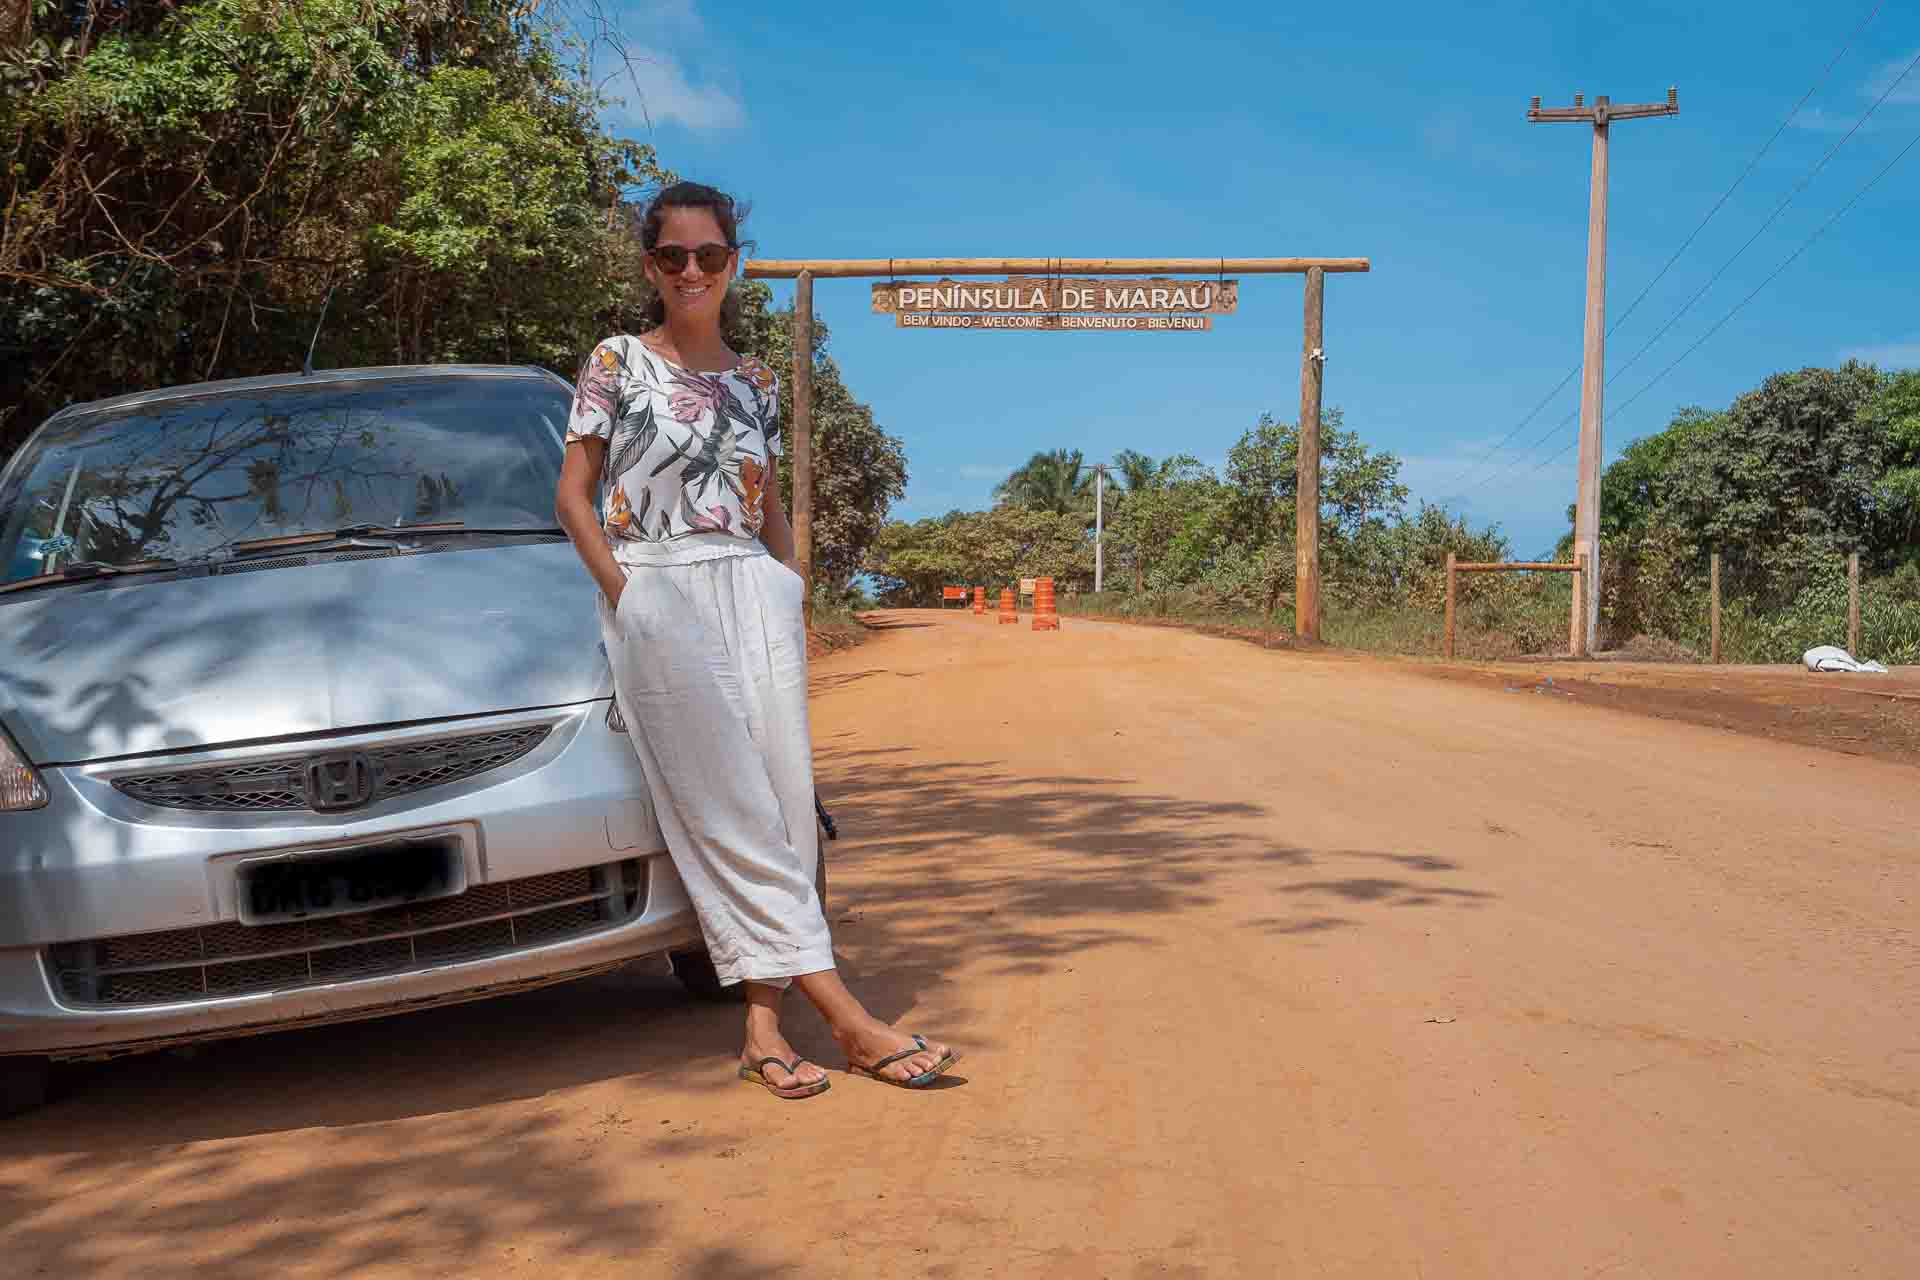 Fernanda standing by the car in the entrance of the Península do Maraú